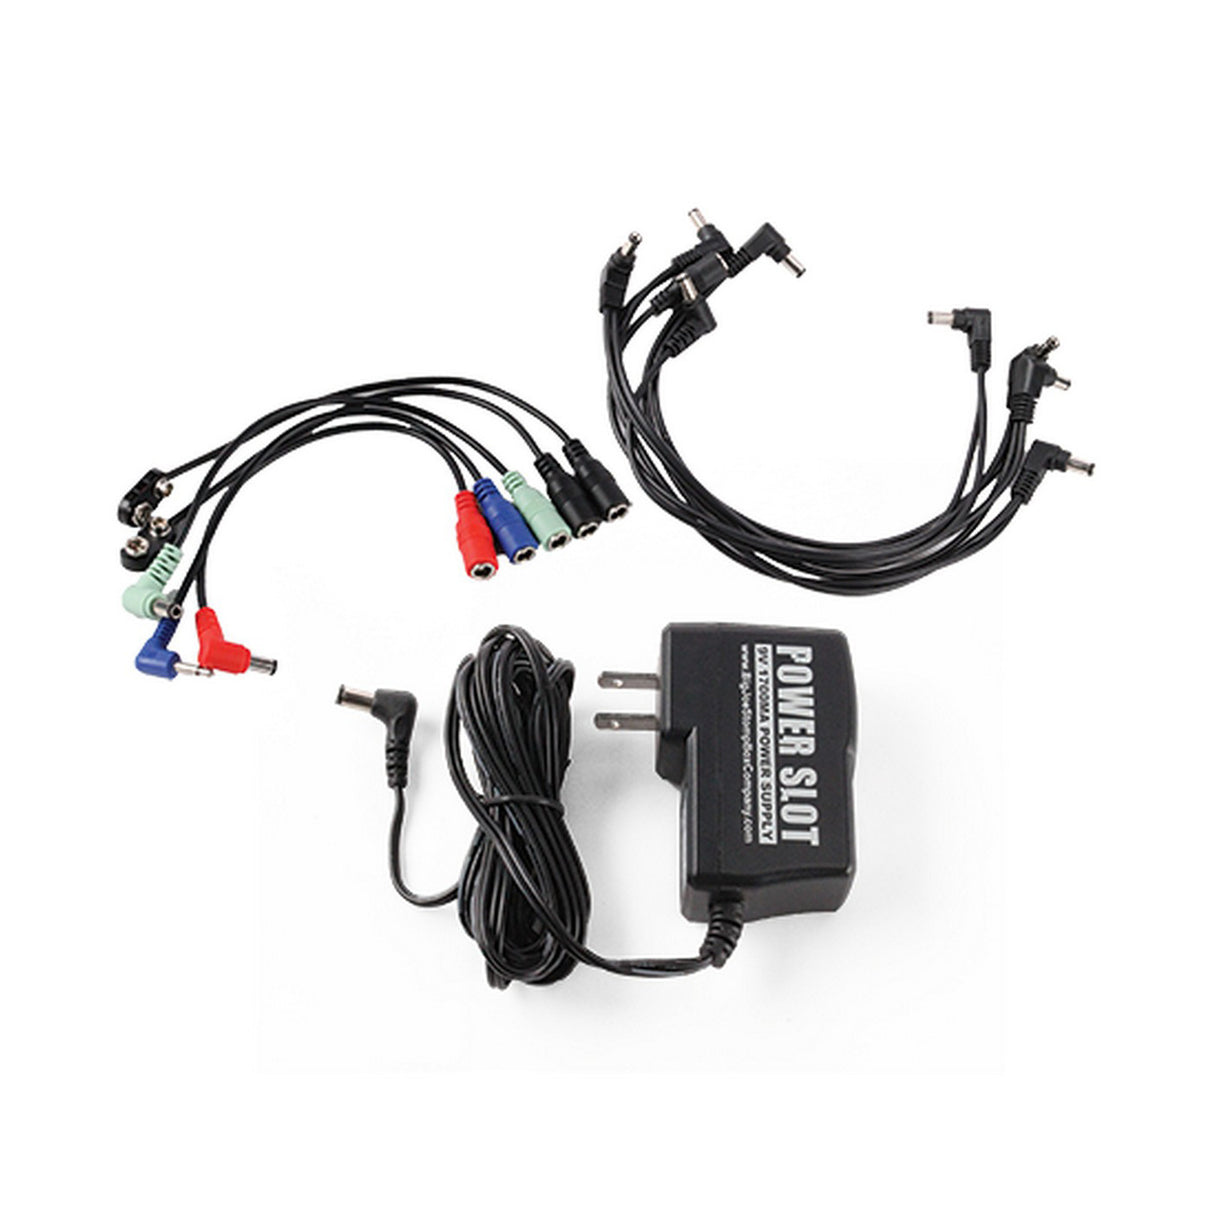 Big Joe Stomp Box Company Power Slot Bonus Pack PS-201 | Single Power Outlet 9v Adaptor 8 Plug Chain Cable